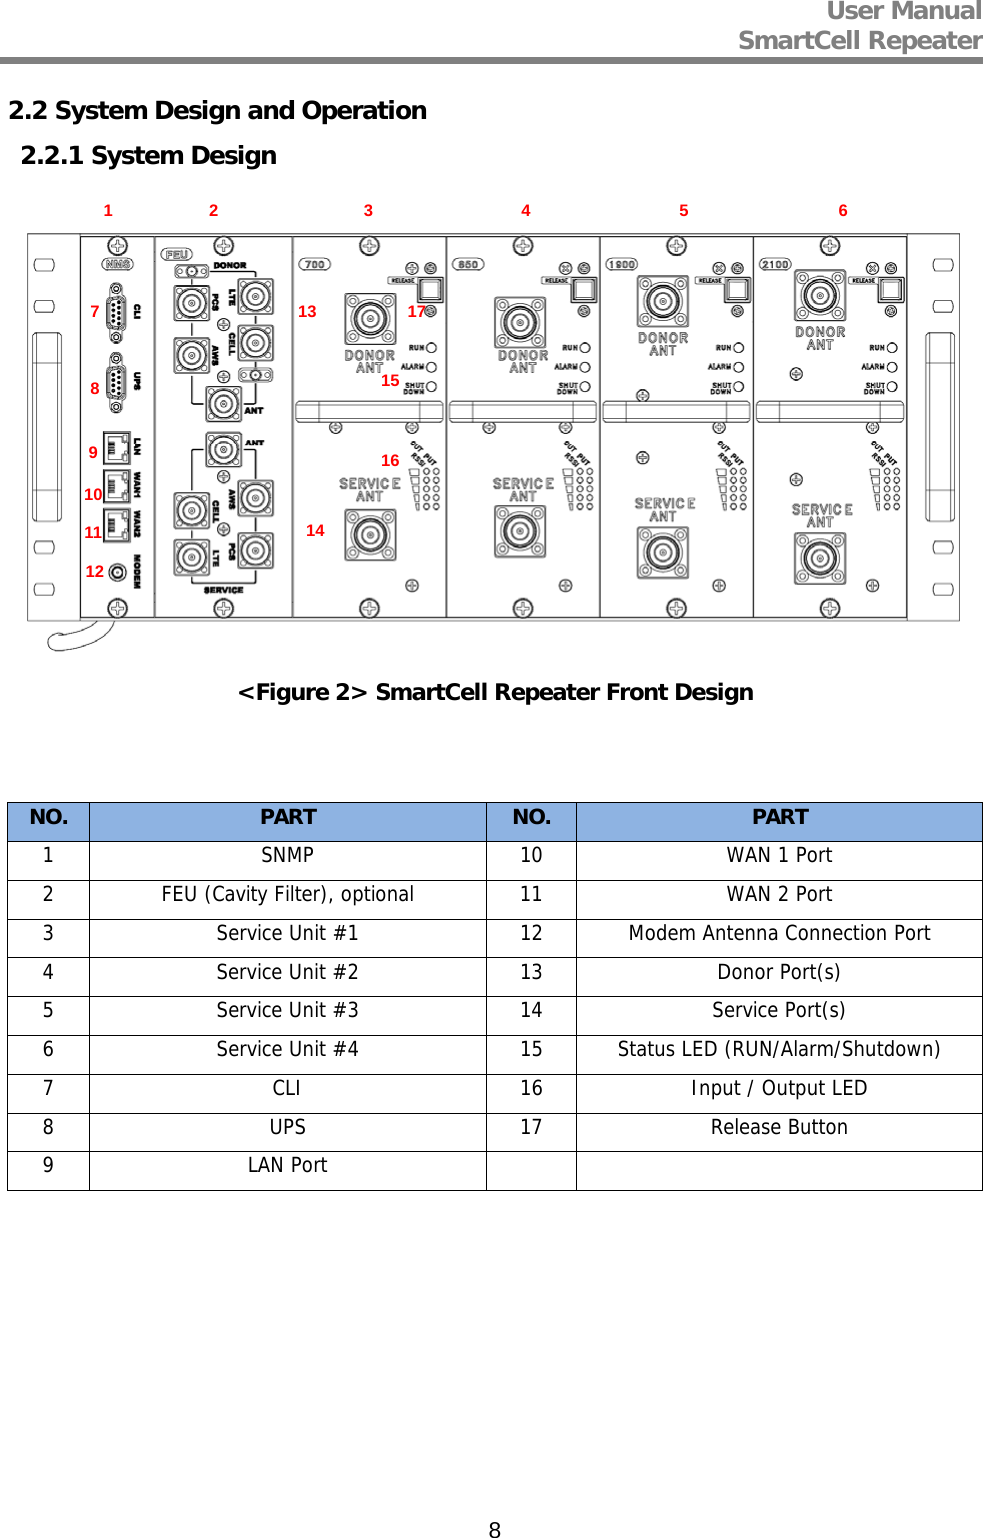 User Manual  SmartCell Repeater   82.2 System Design and Operation 2.2.1 System Design   &lt;Figure 2&gt; SmartCell Repeater Front Design   NO.  PART  NO. PART 1  SNMP  10 WAN 1 Port 2  FEU (Cavity Filter), optional 11 WAN 2 Port 3  Service Unit #1  12 Modem Antenna Connection Port4  Service Unit #2  13 Donor Port(s) 5  Service Unit #3  14 Service Port(s) 6  Service Unit #4  15 Status LED (RUN/Alarm/Shutdown)7  CLI  16 Input / Output LED 8 UPS 17 Release Button 9 LAN Port           7 8 1 9 10 11 12 2 3 4 5 6 13 14 161517